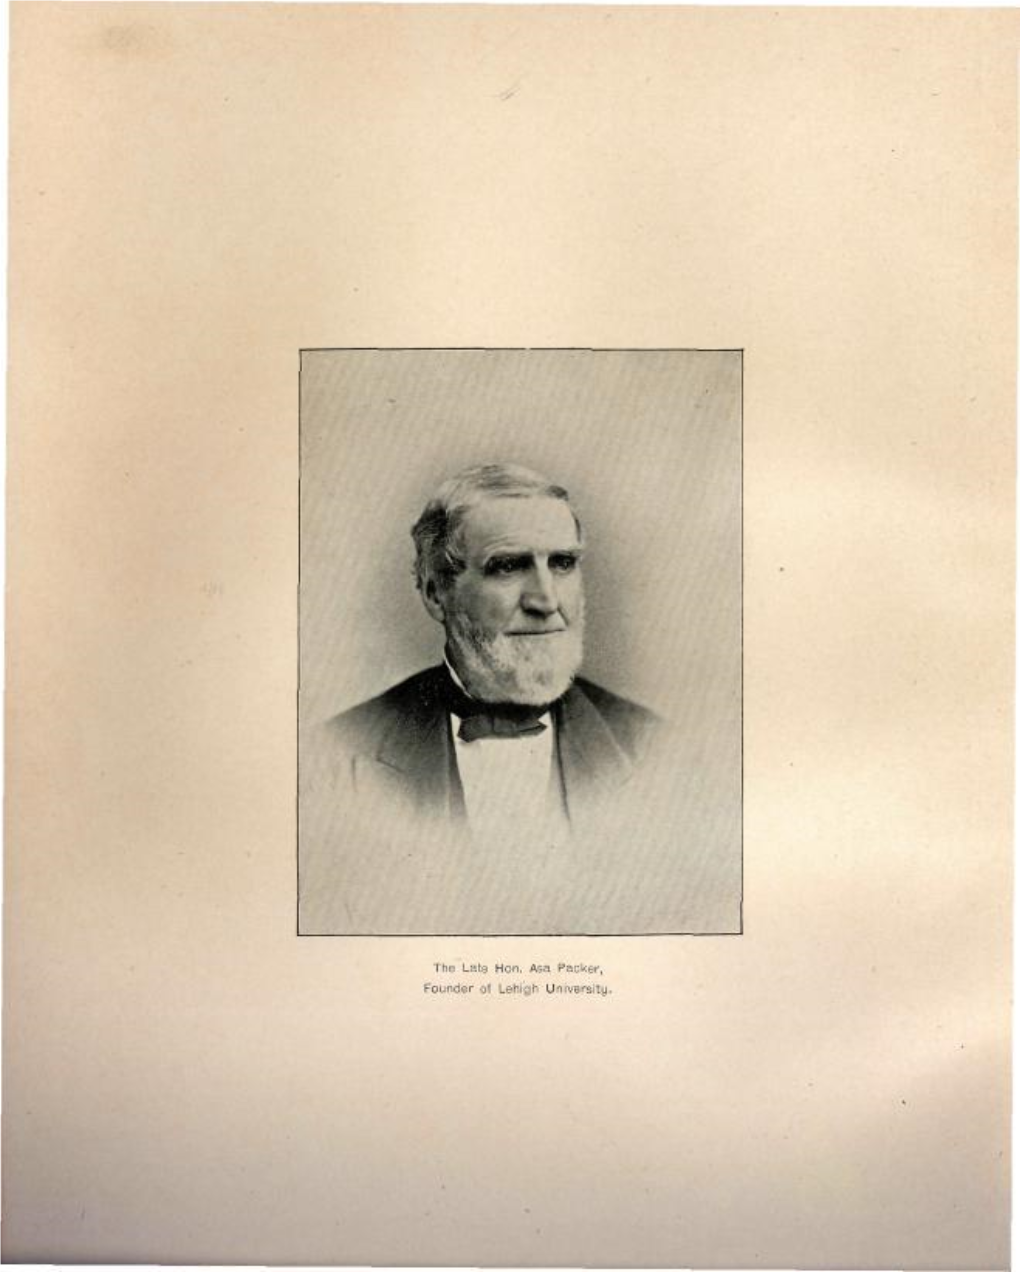 The Late Hon. Asa Packer, Founder of Lehigh University. the LEHIGH UNIVERSITY